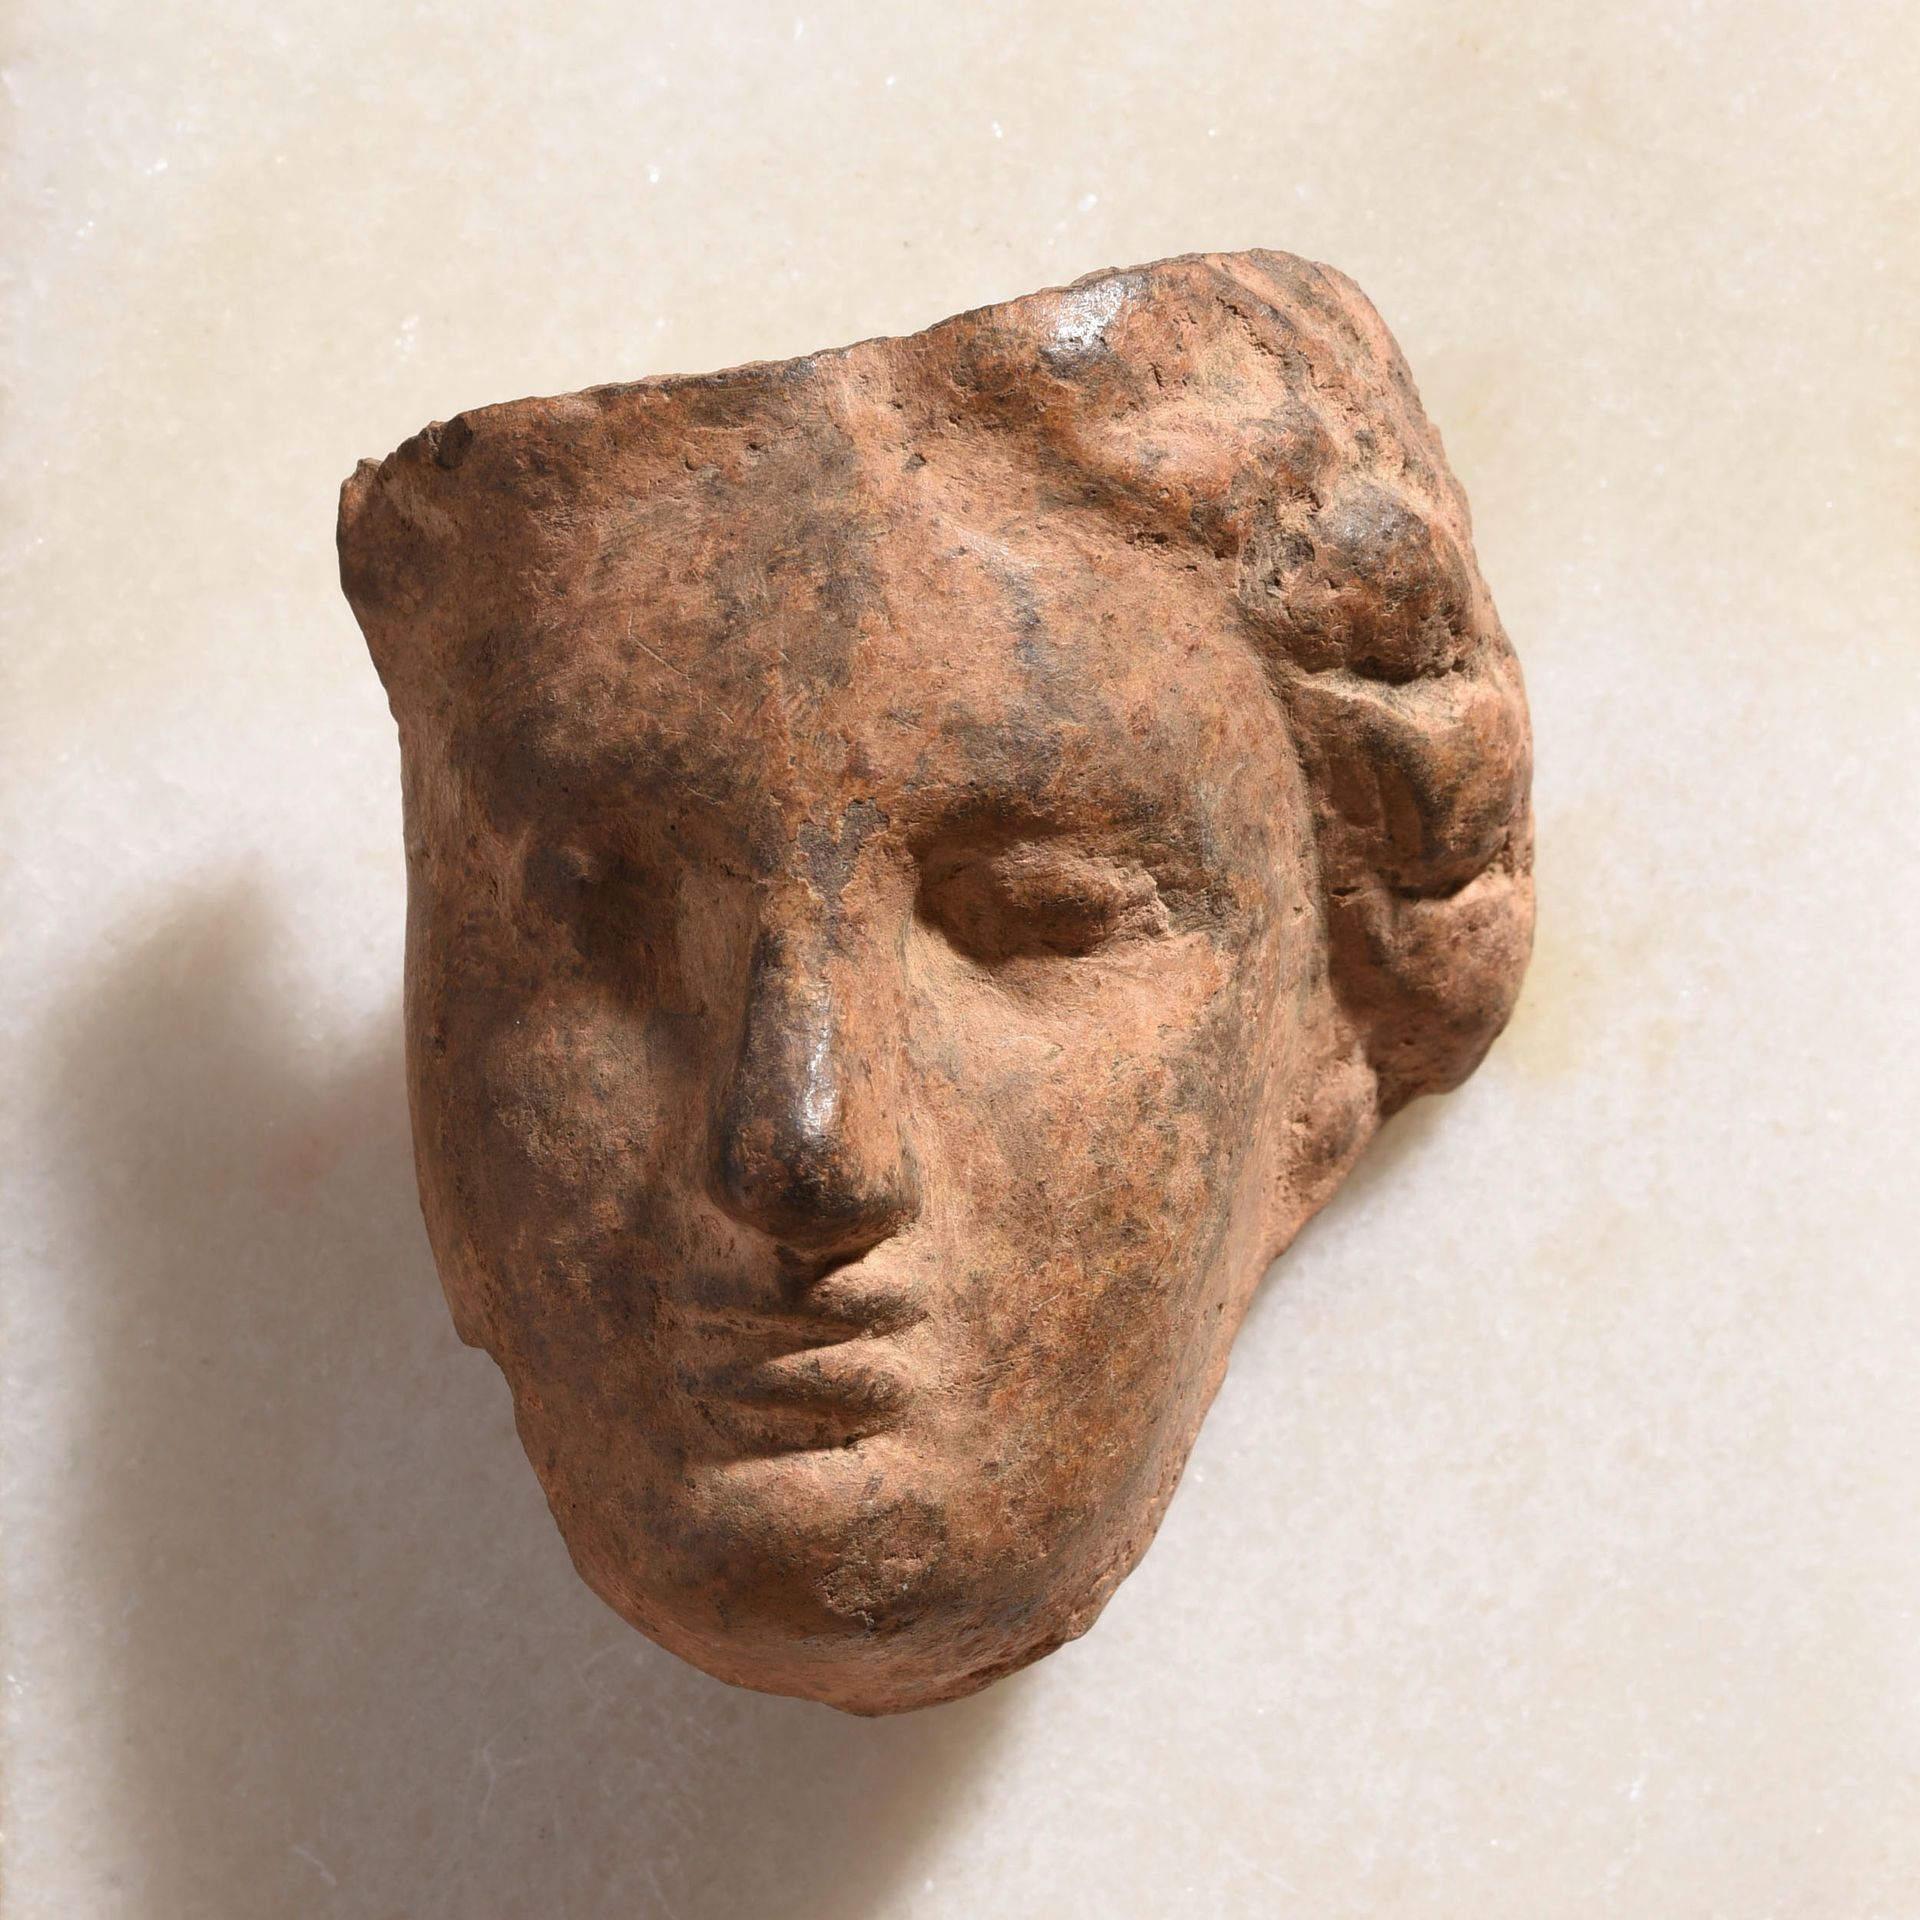 Null FRAGMENT OF A FEMALE HEAD

Hellenistic art, 3rd century B.C.

In terracotta&hellip;